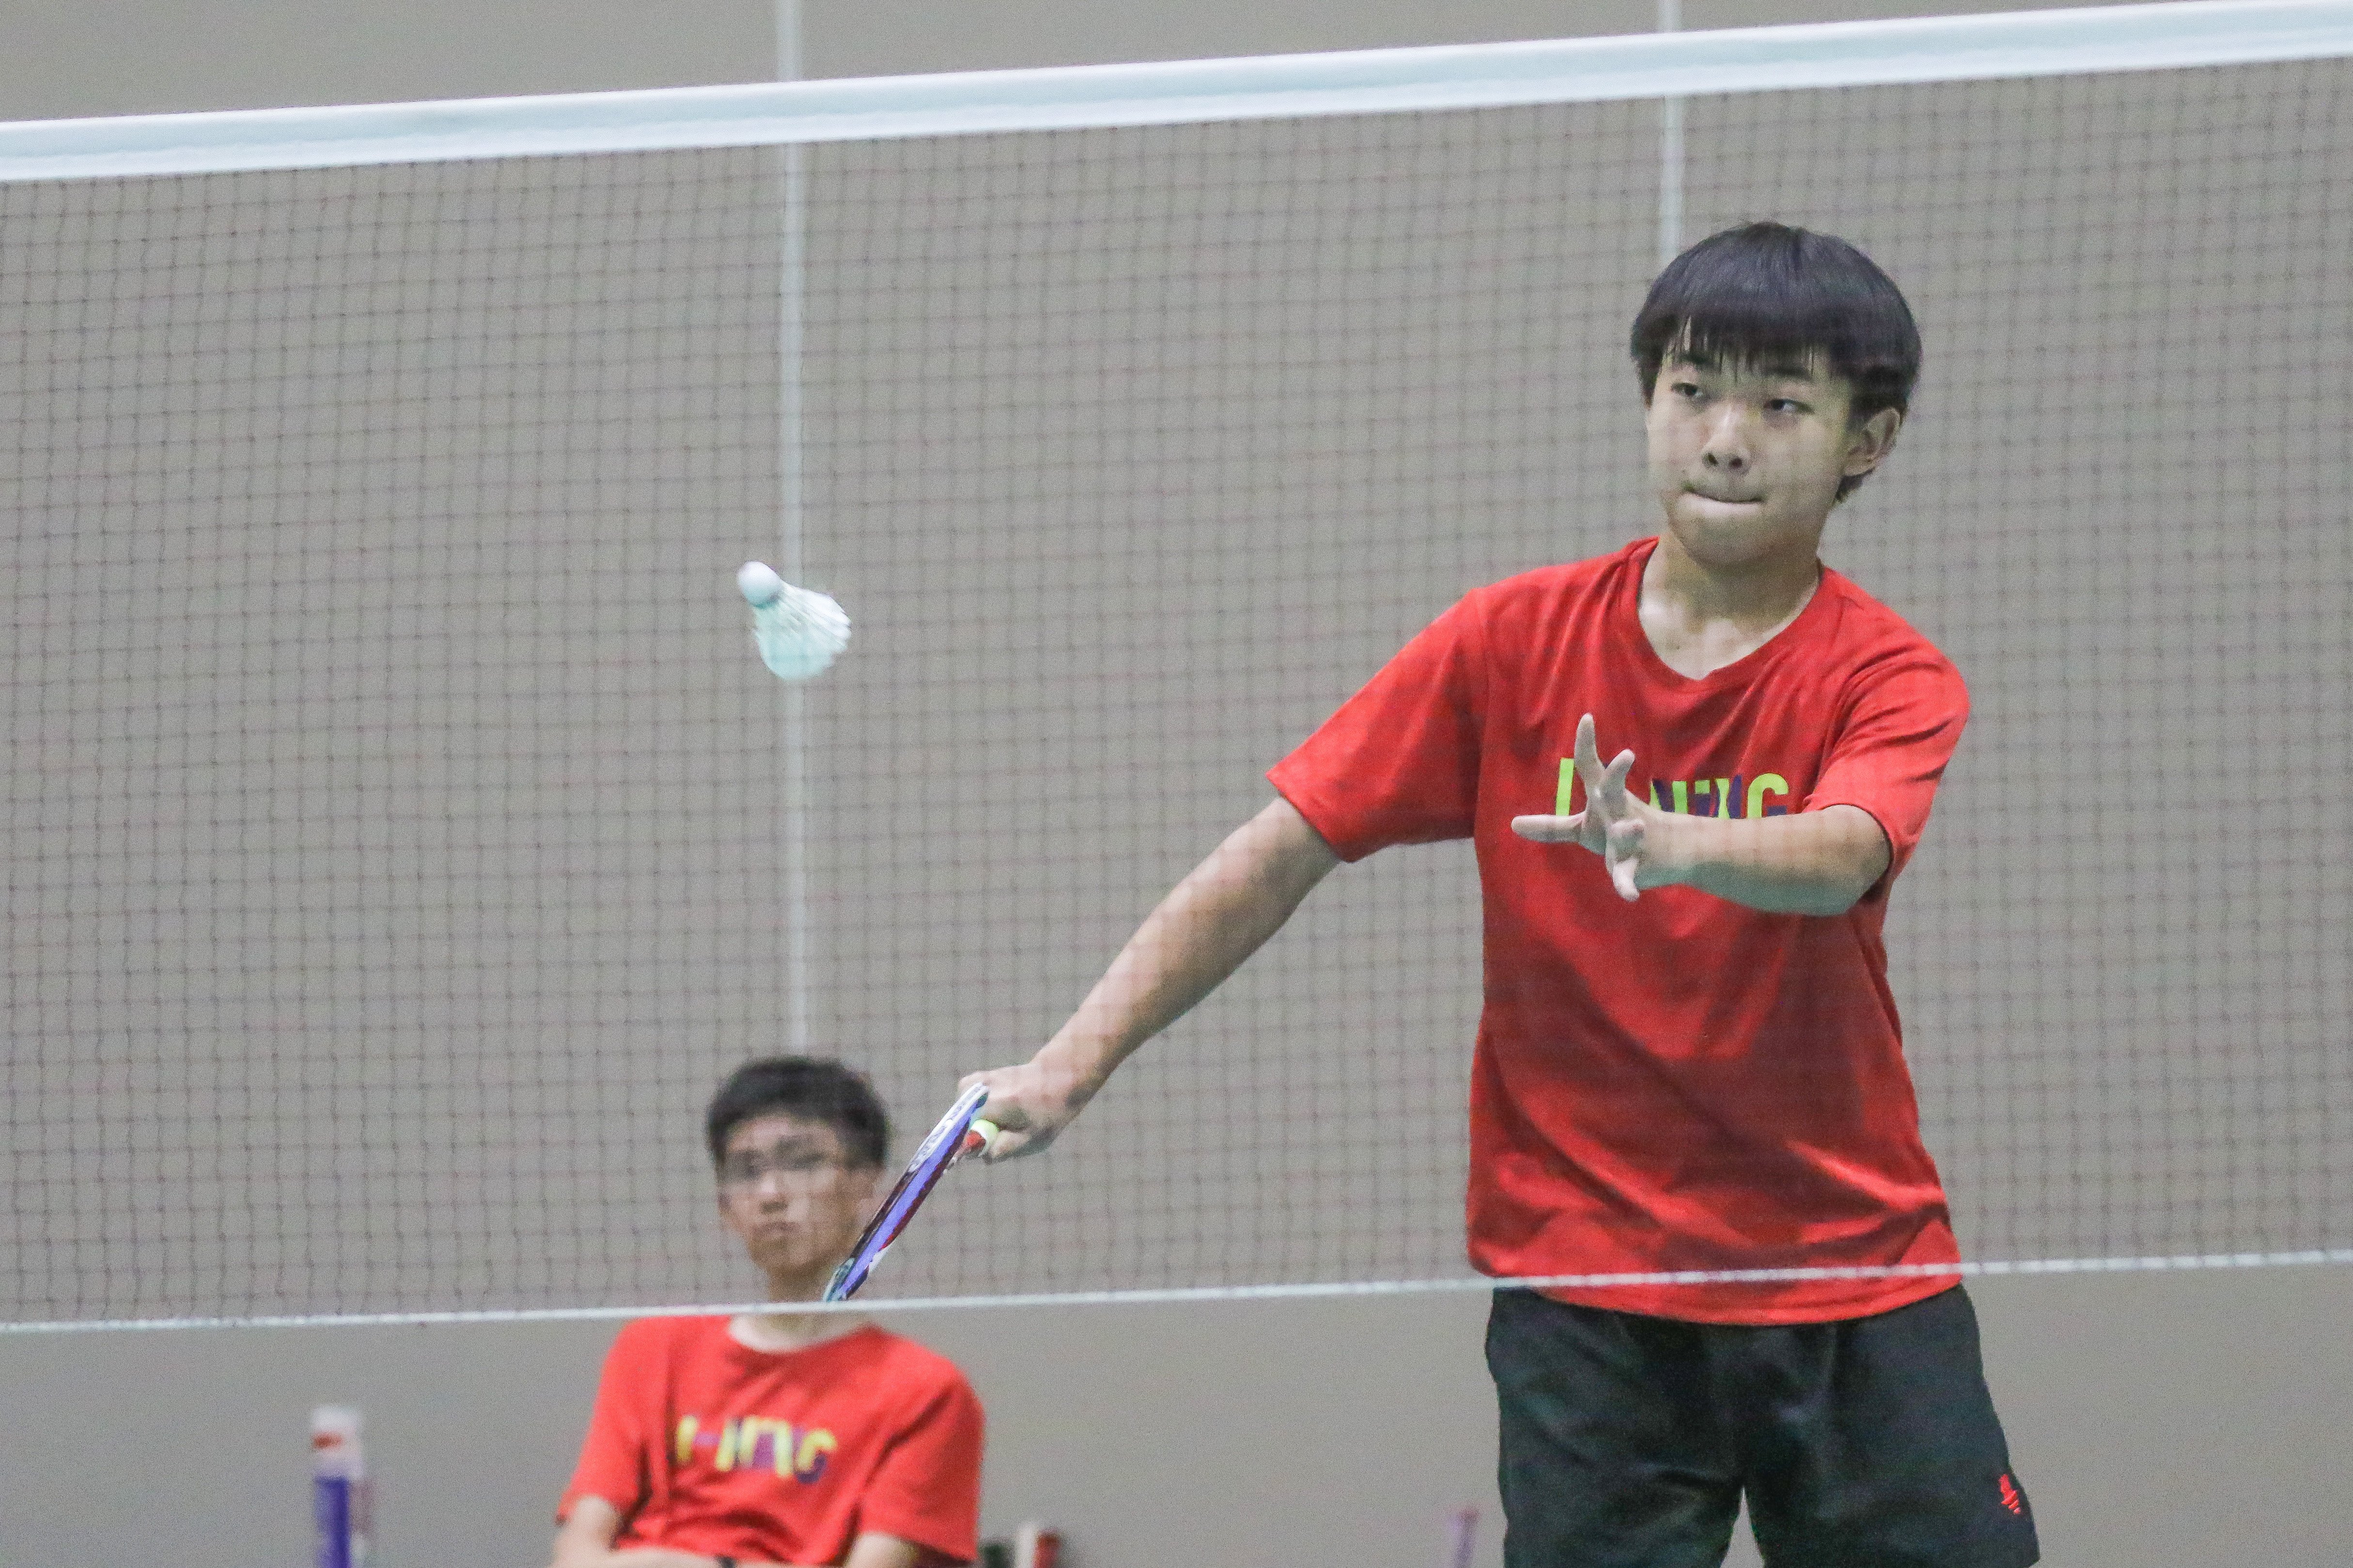 2023-05-17_Badminton_By Chin KK_IFP_1919_edited